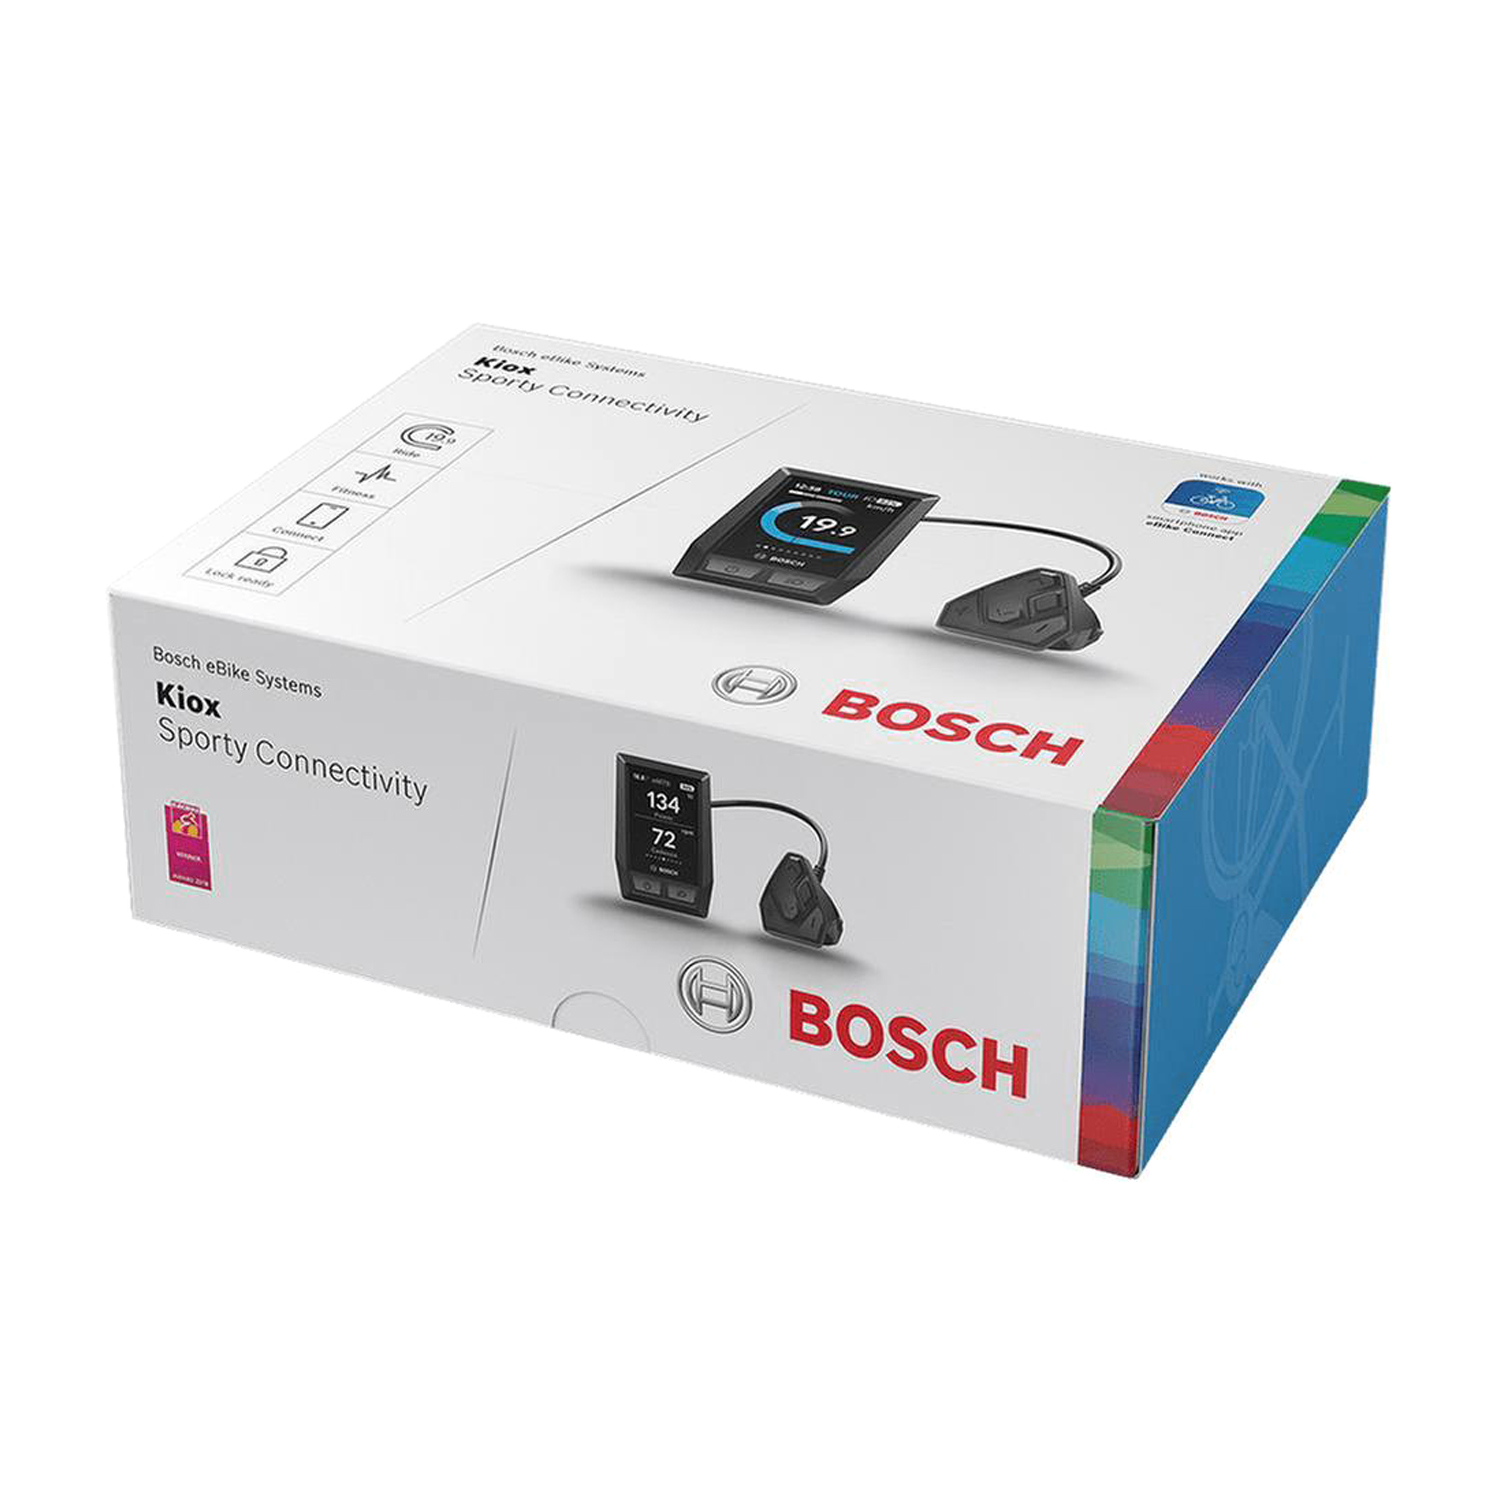 Bosch ombouwset Kiox (BUI330)